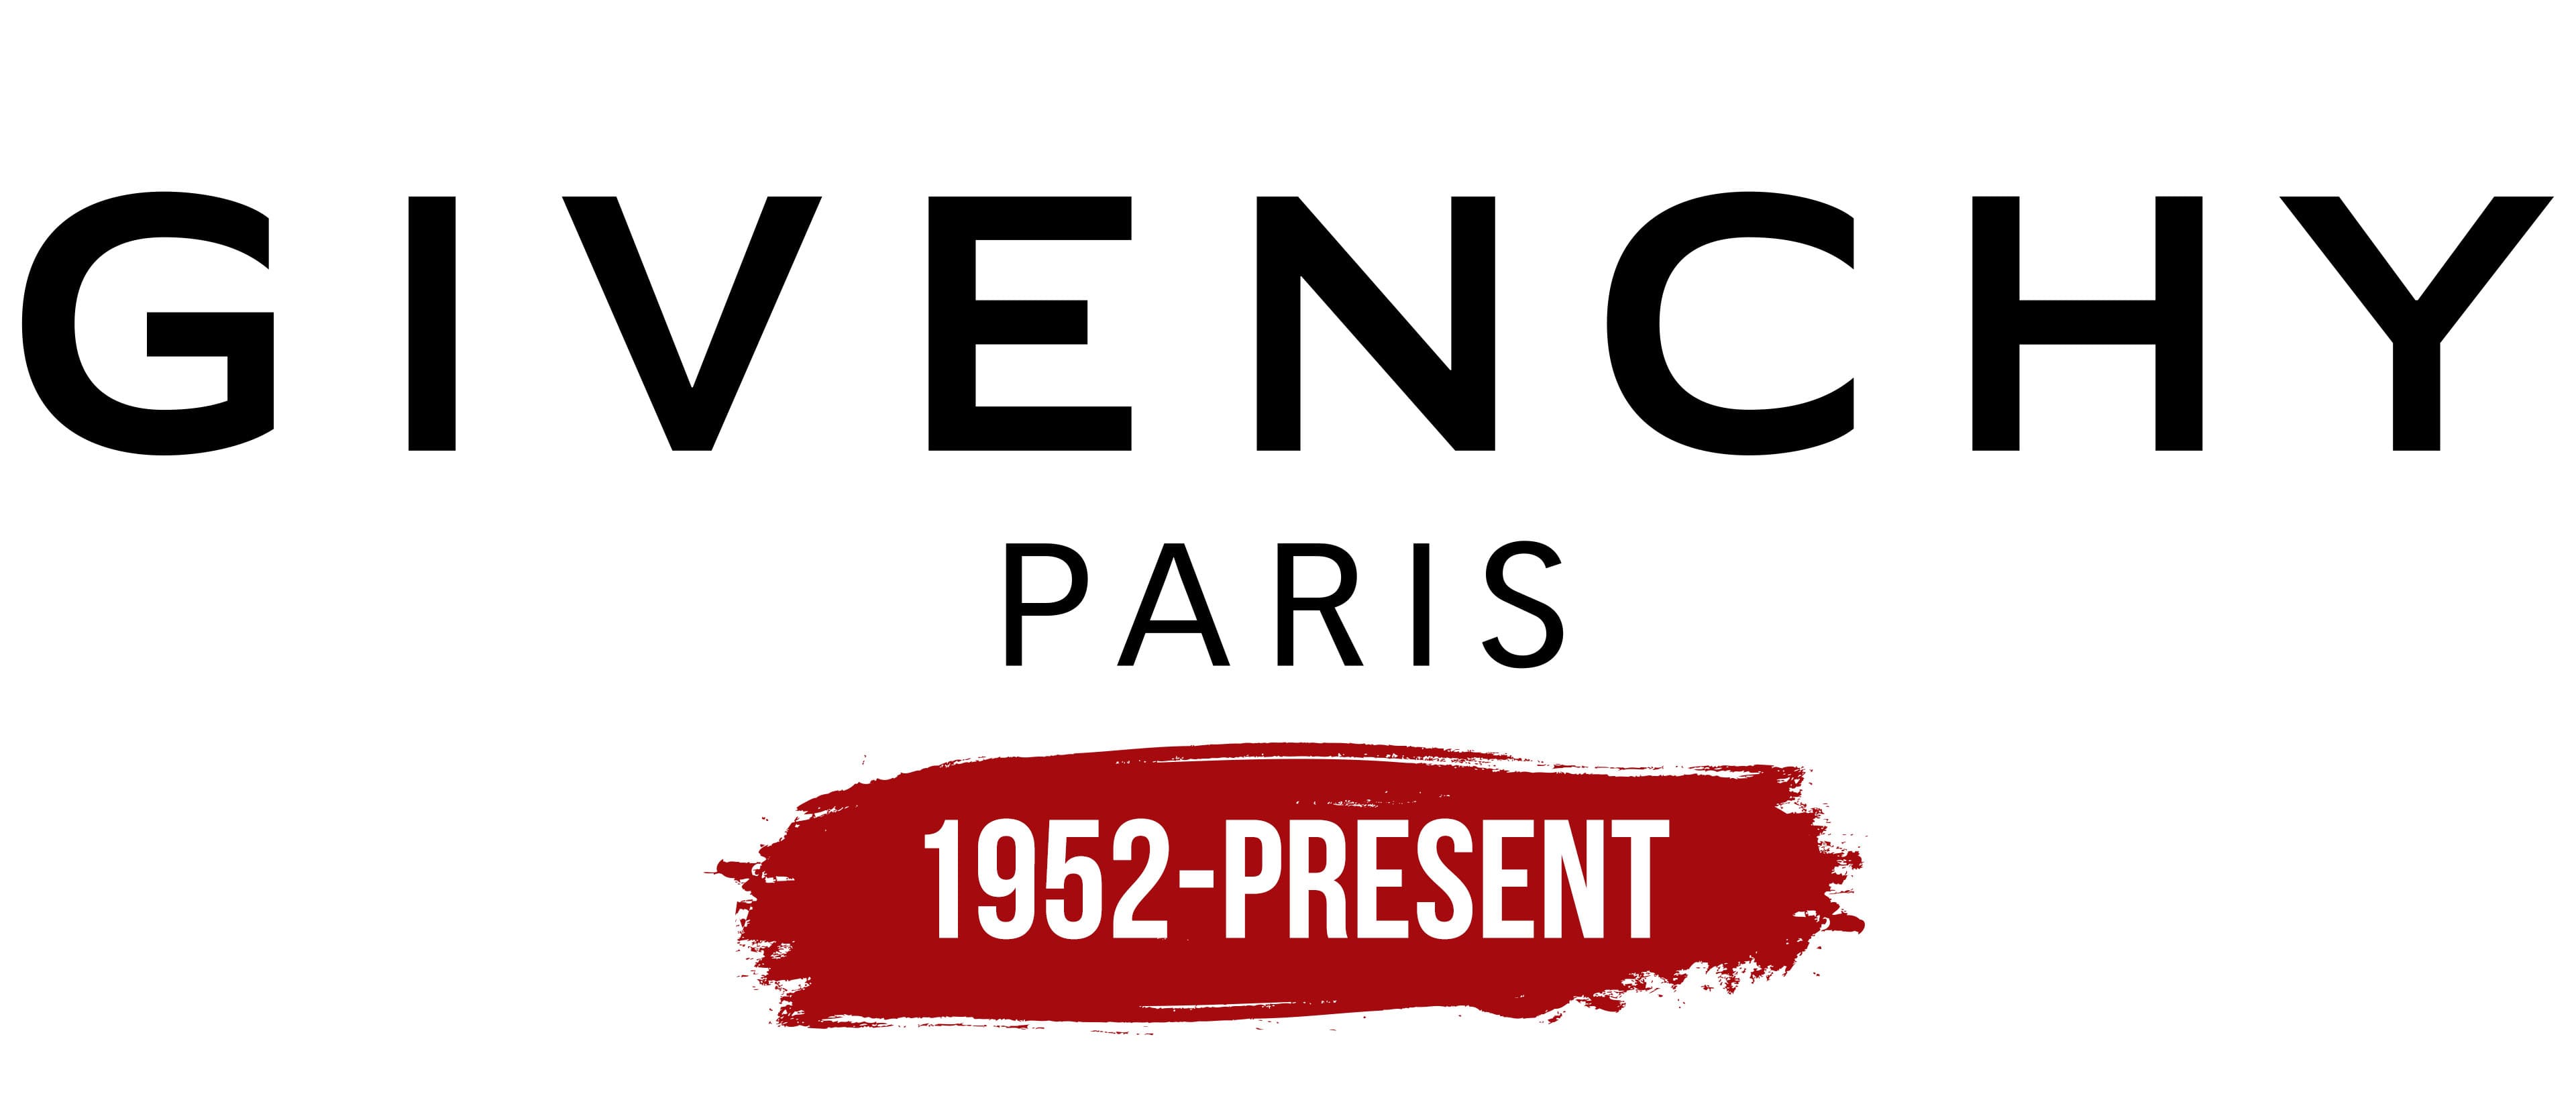 Givenchy Paris Logo Png | art-kk.com